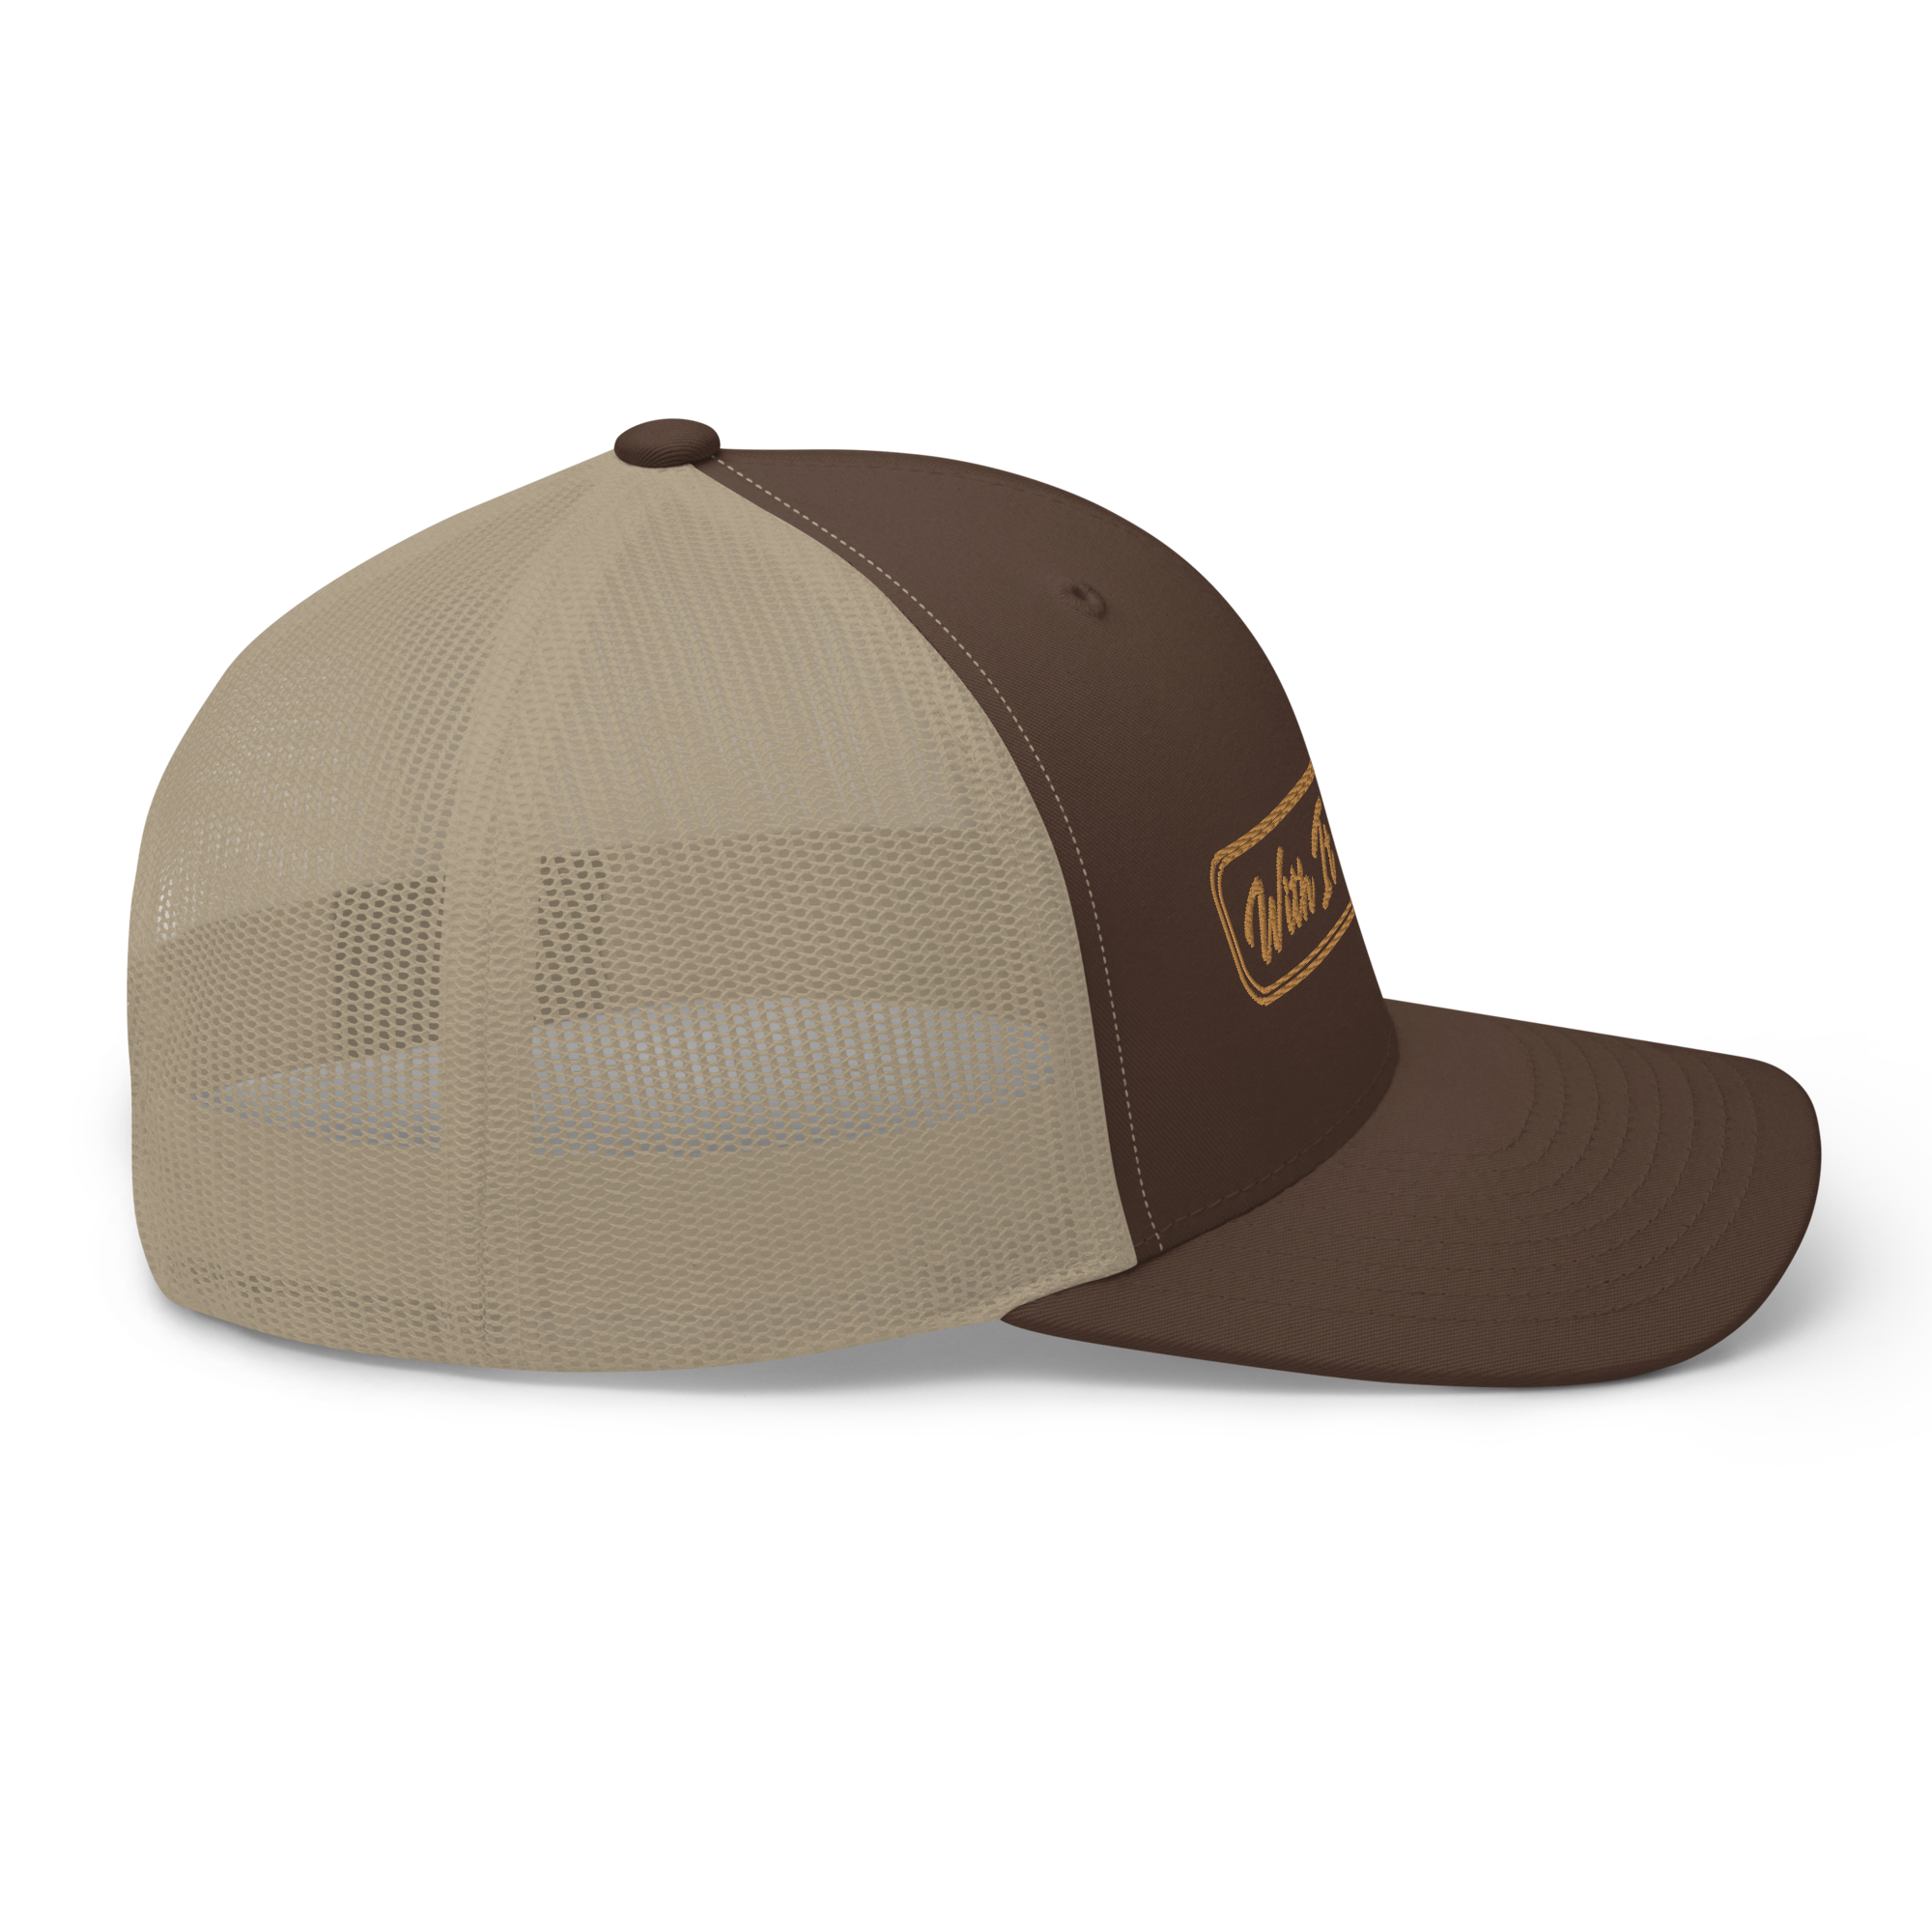 Original Trucker Hat - Brown/Tan/Gold